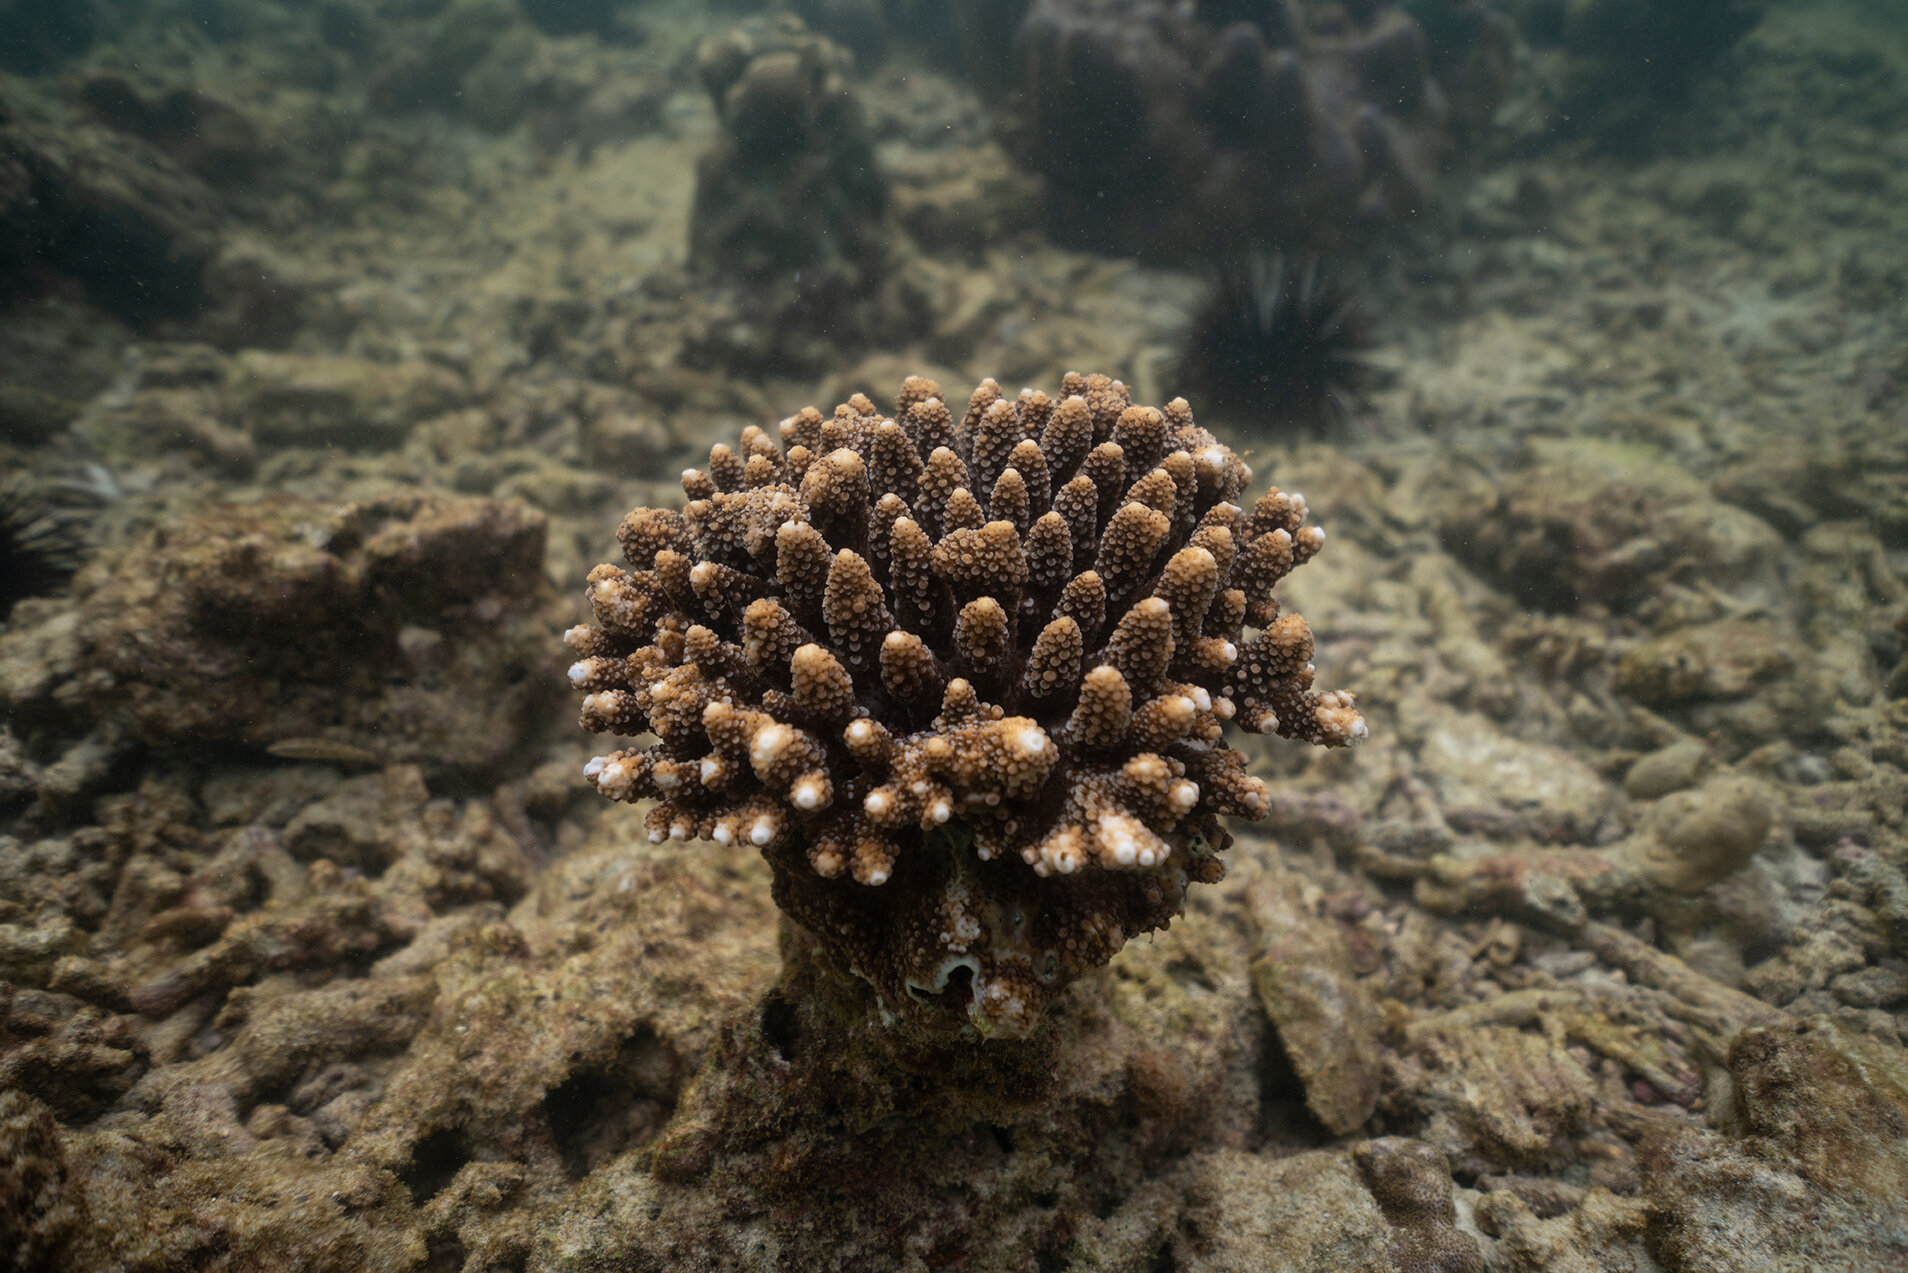  Feb 03, 2020 - Kyun Pila, Myanmar. A coral amongst piece of dead coral on the ocean floor. © Nicolas Axelrod / Ruom 